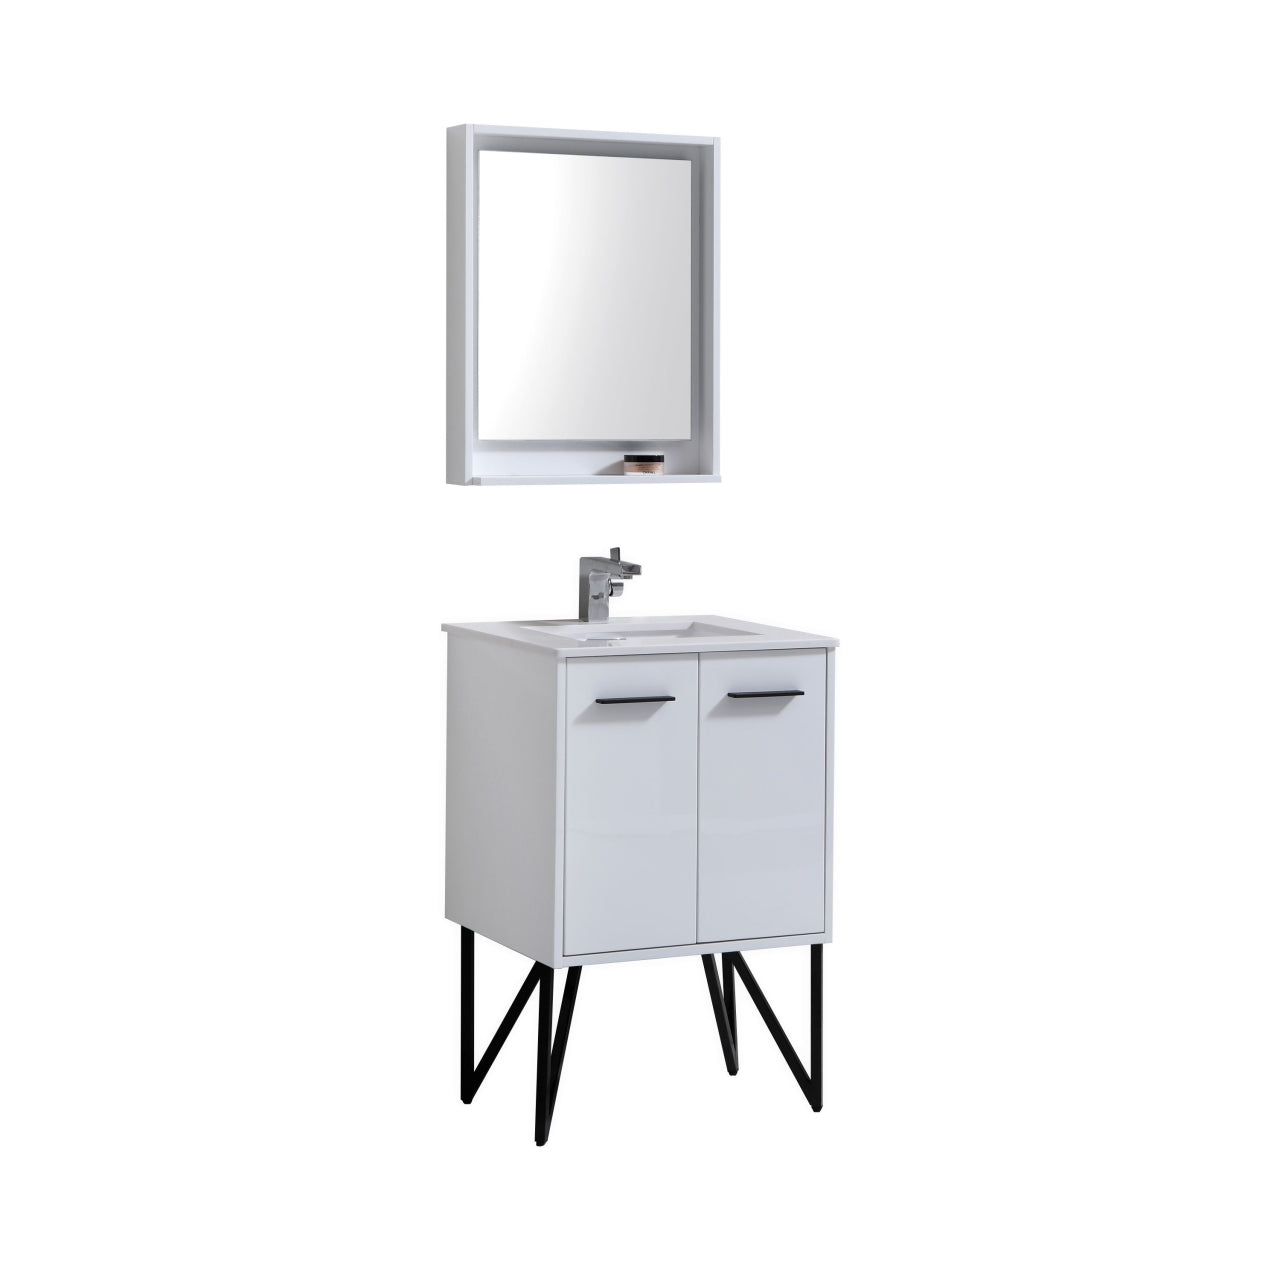 KUBEBATH Bosco KB24GW 24" Single Bathroom Vanity in High Gloss White with Cream Quartz, Rectangle Sink, Angled View with Mirror